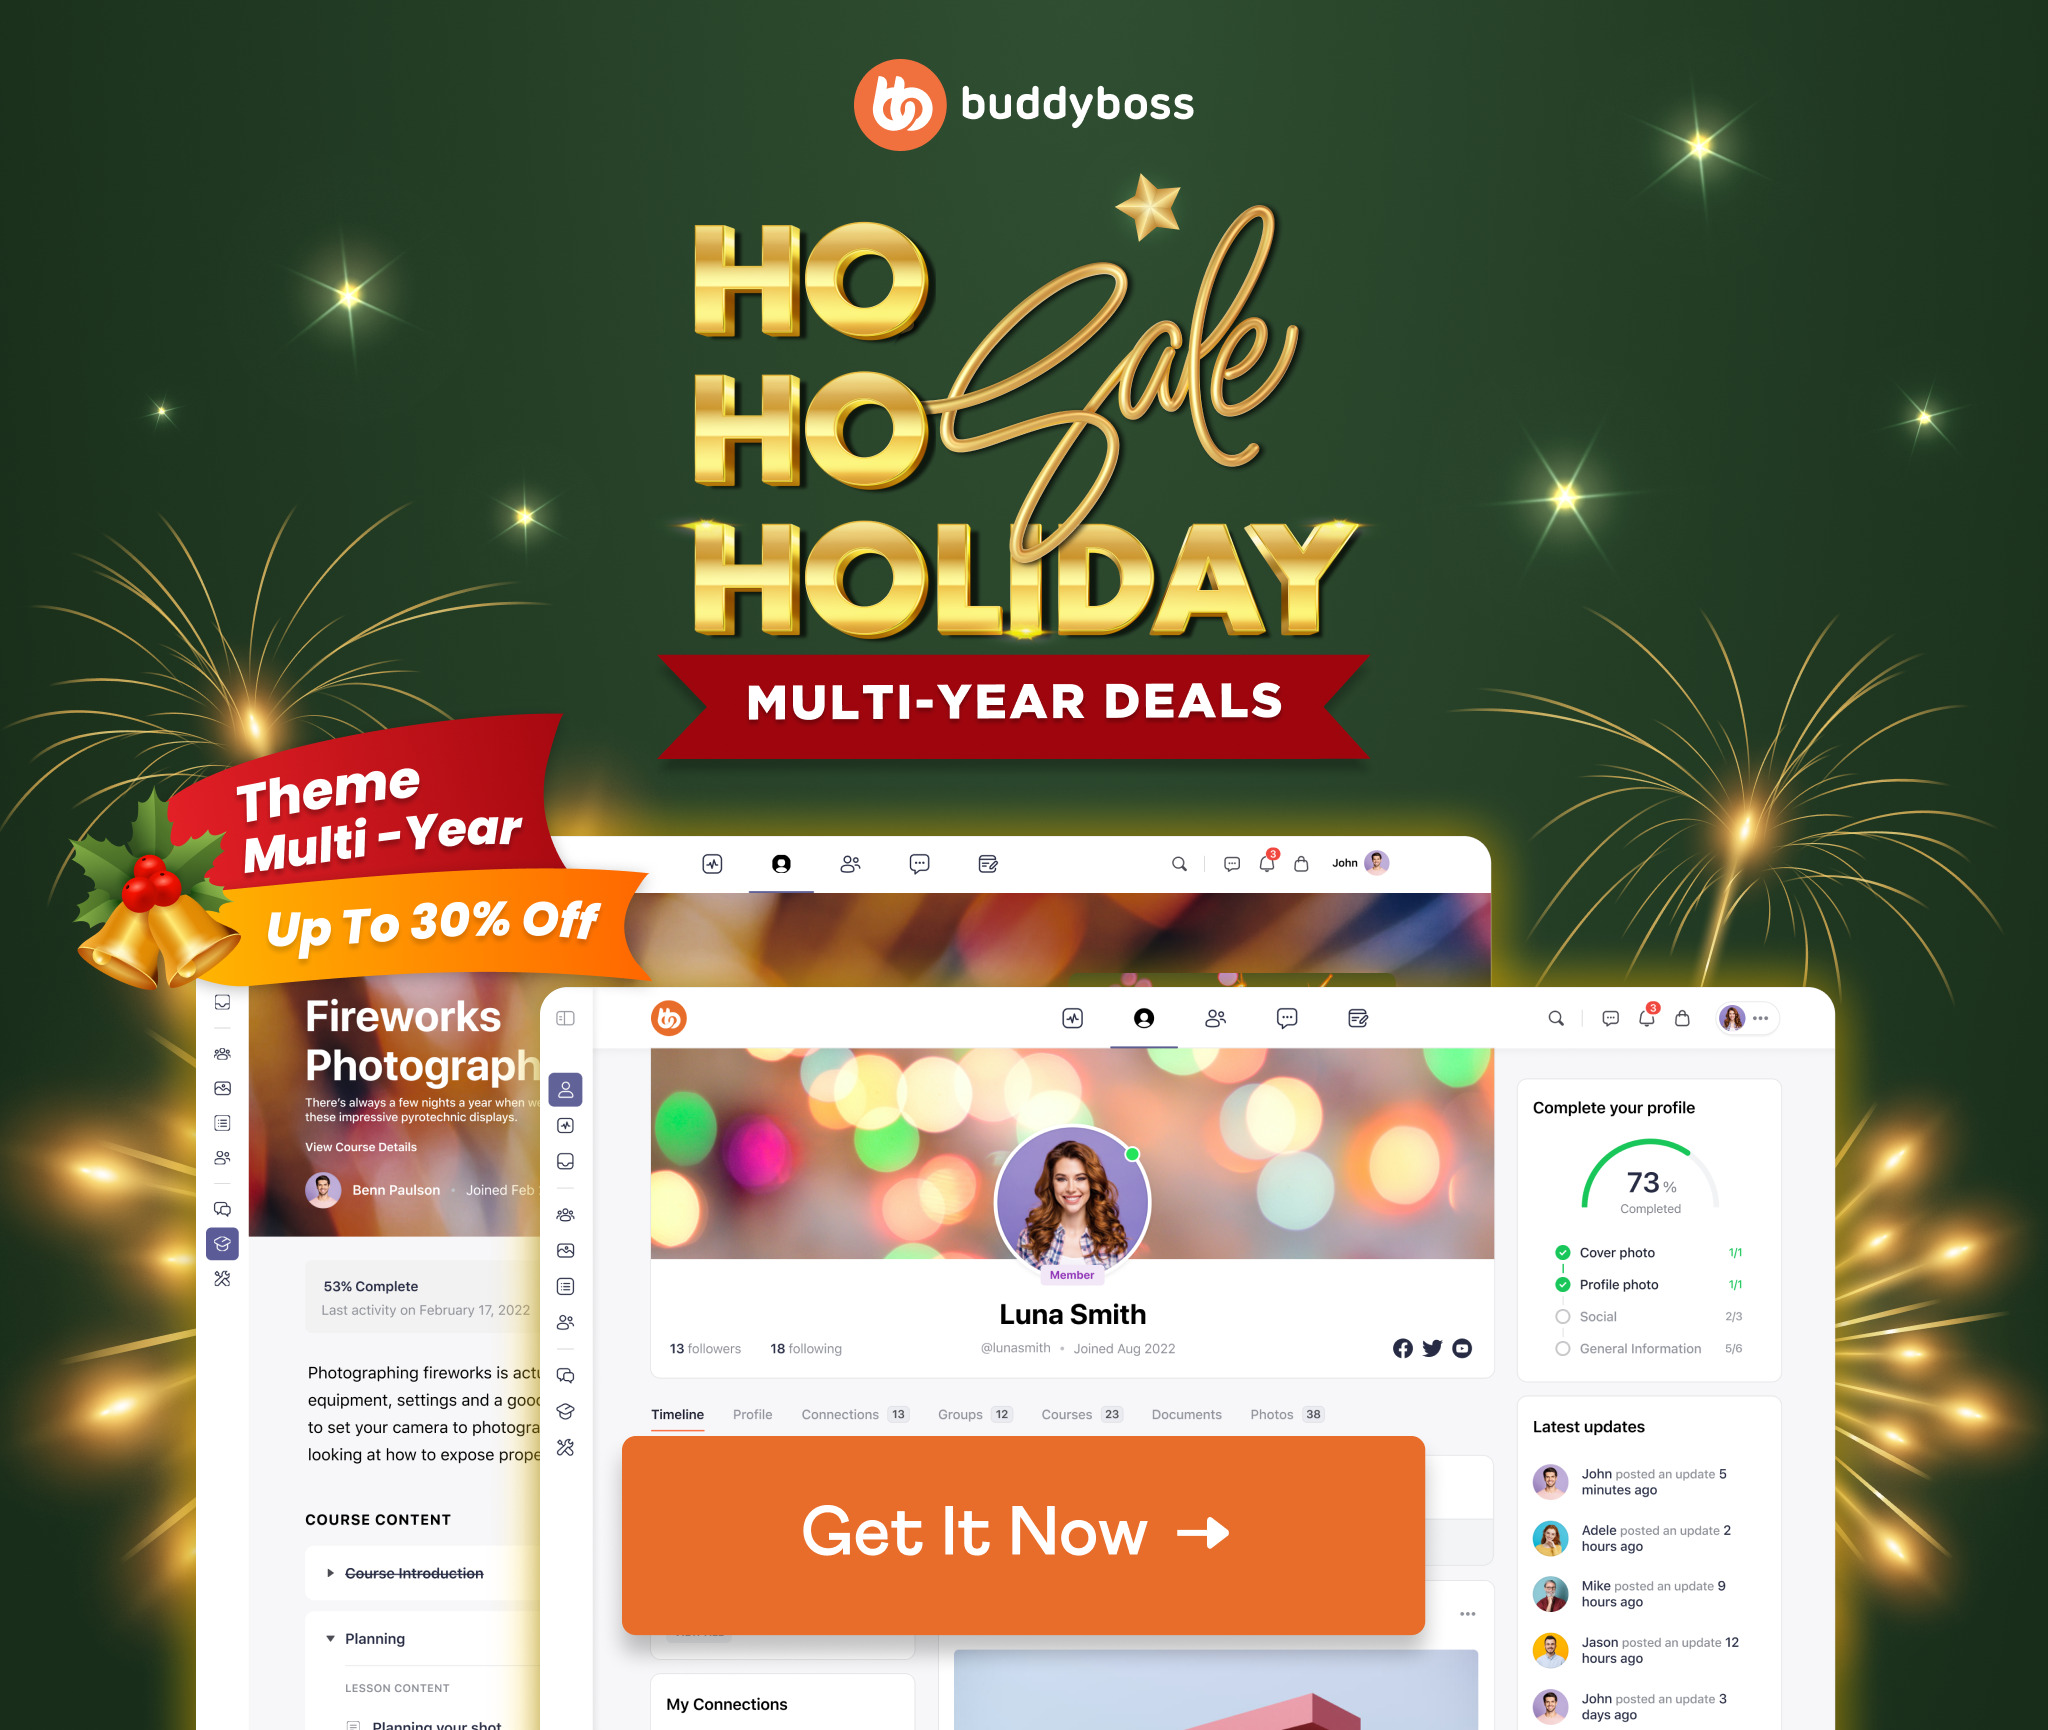 BuddyBoss Theme Holiday Deals